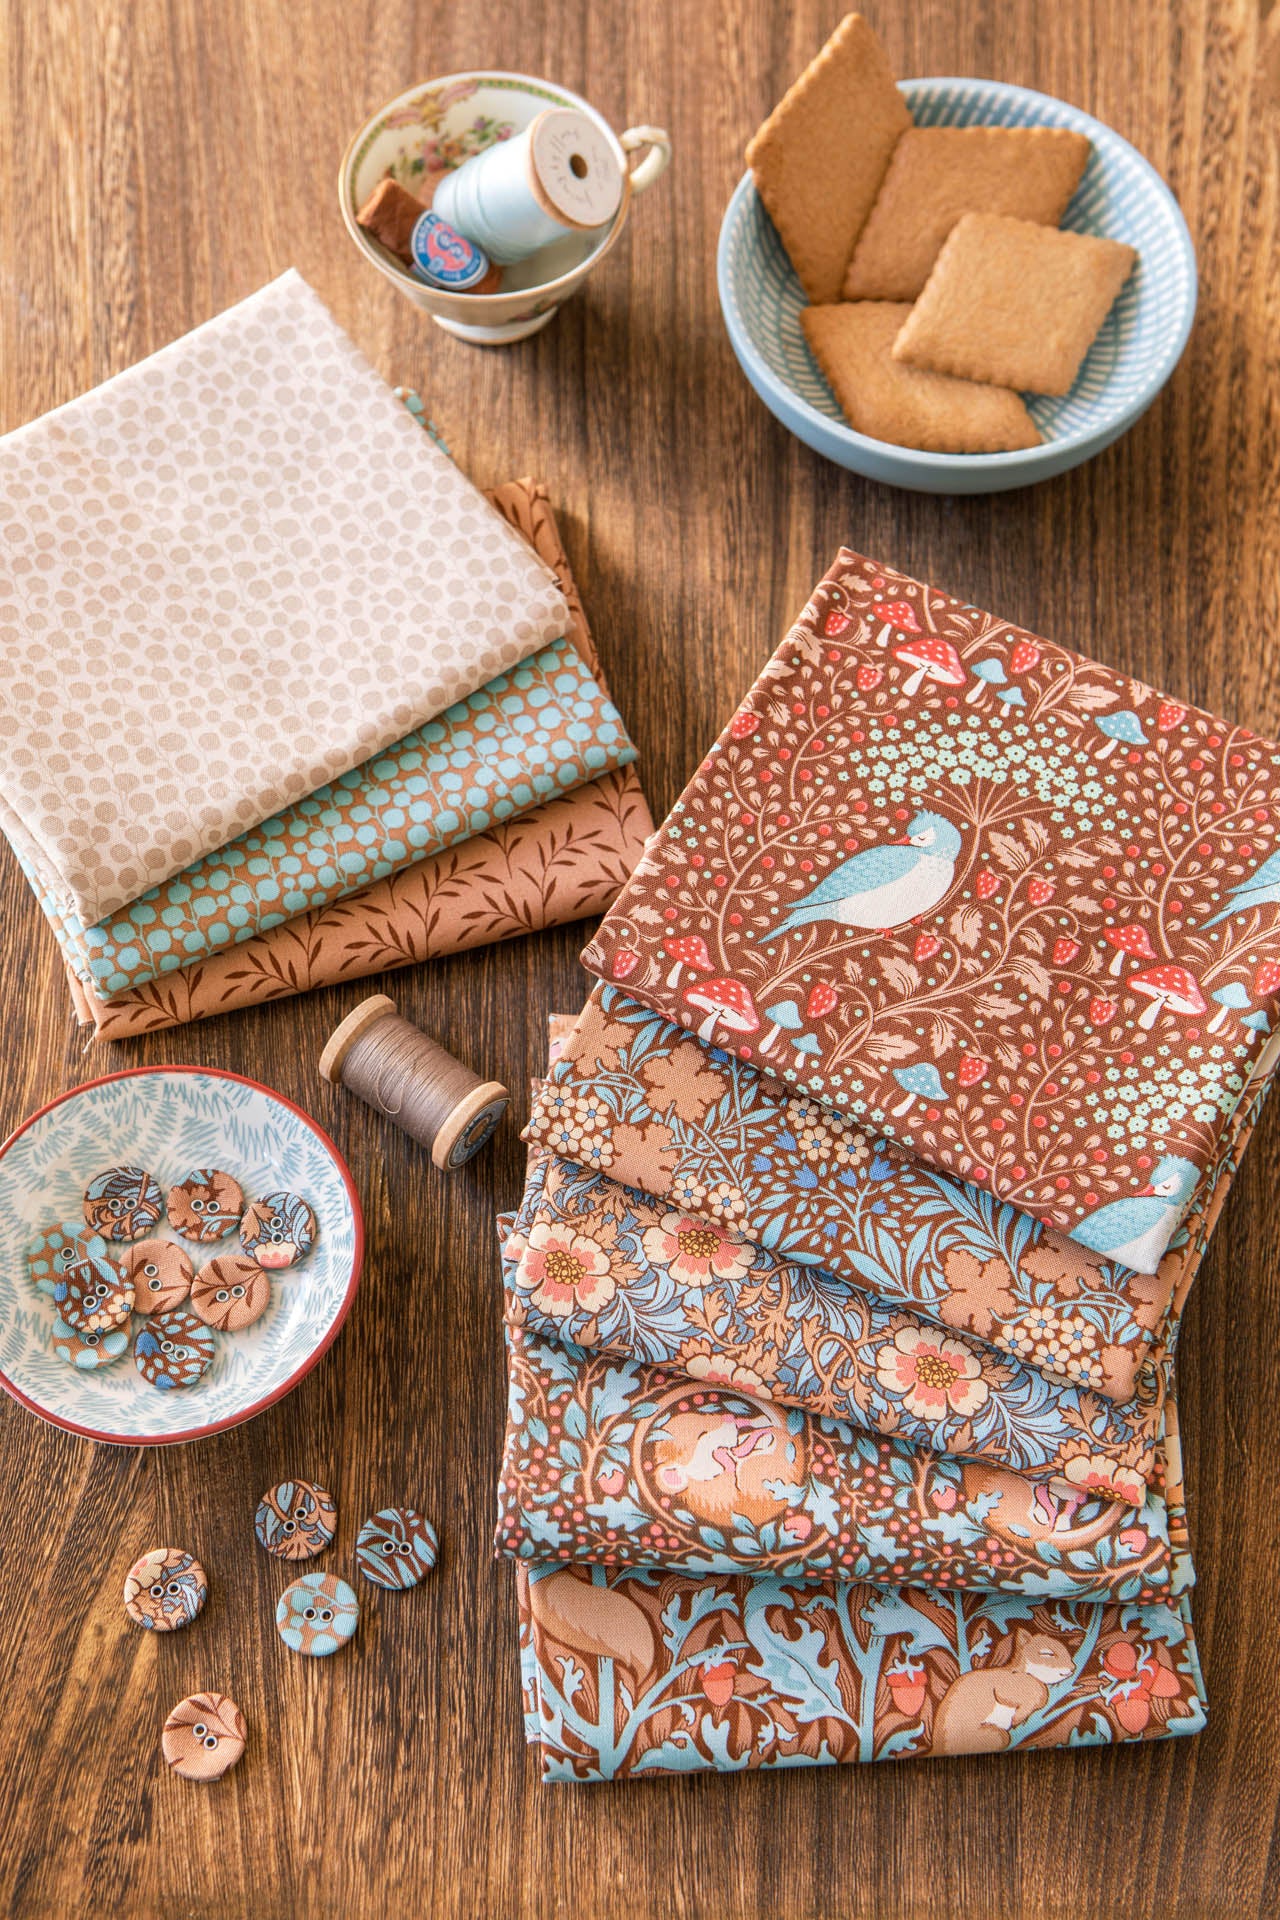 Tilda Hibernation Pecan fabrics the Fat quarter - cotton fabric.